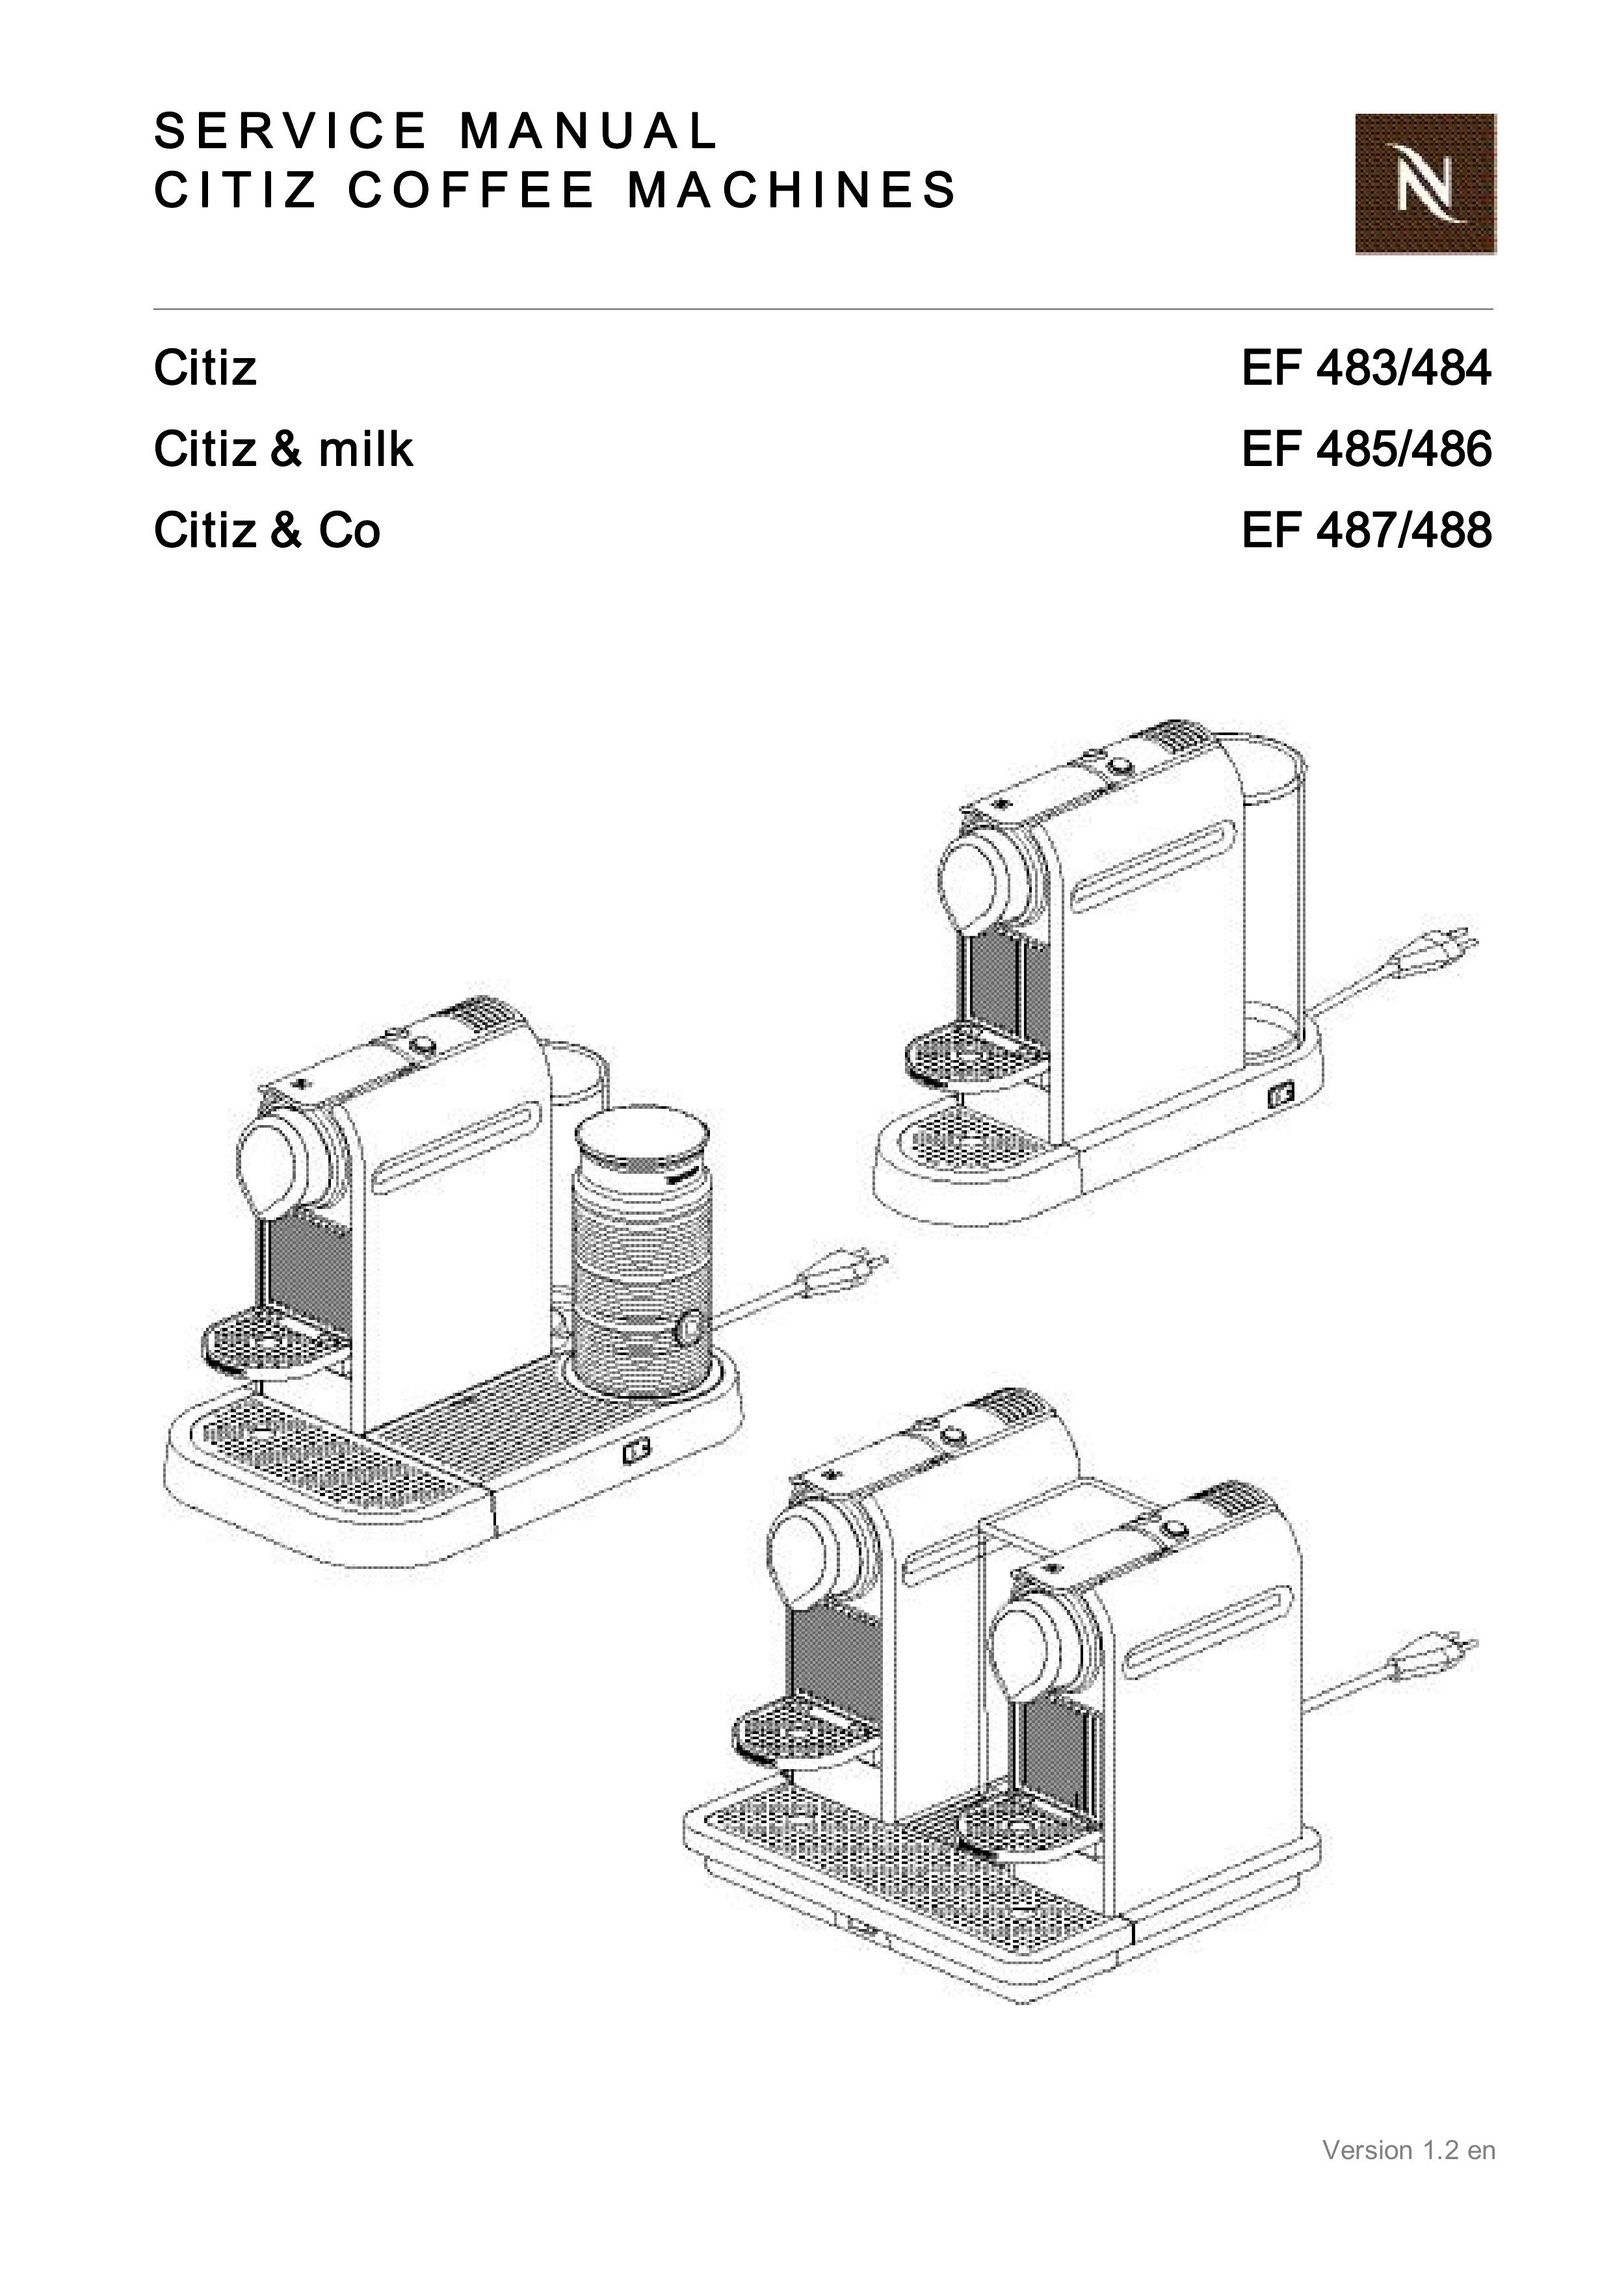 Nespresso EF487/488 Coffeemaker User Manual